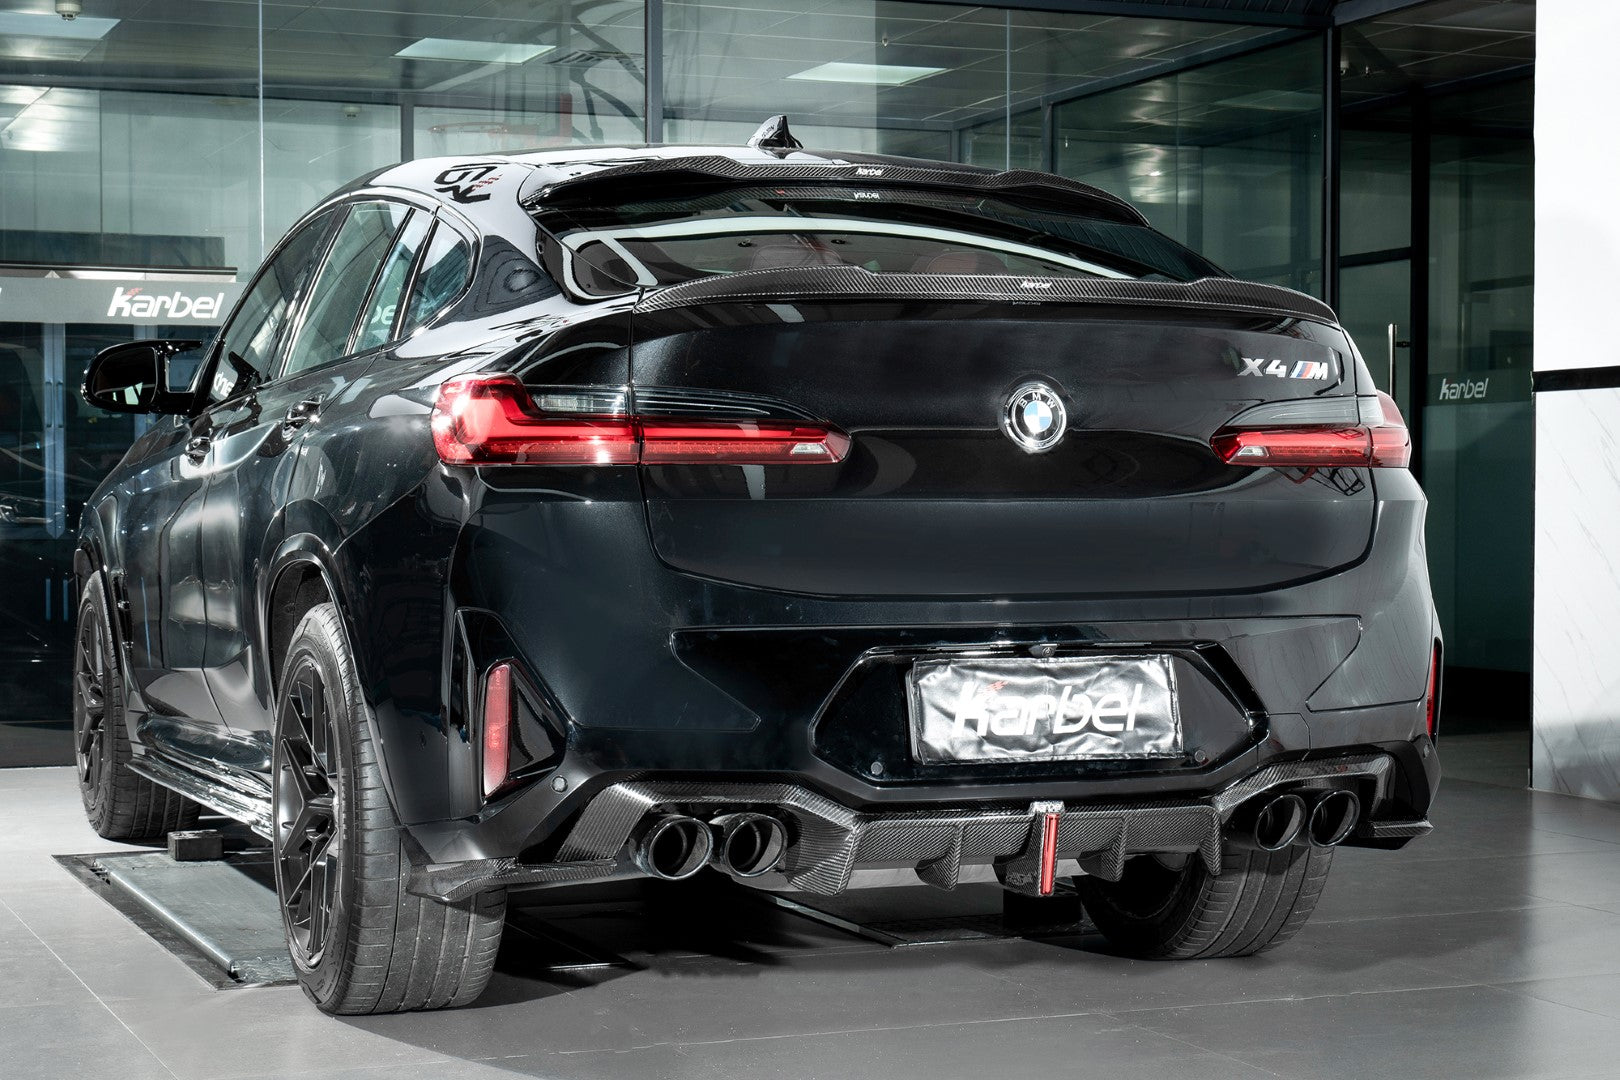 Karbel Carbon Pre-preg Carbon Fiber Rear Diffuser for BMW X4M/C F98 LCI 2022-ON